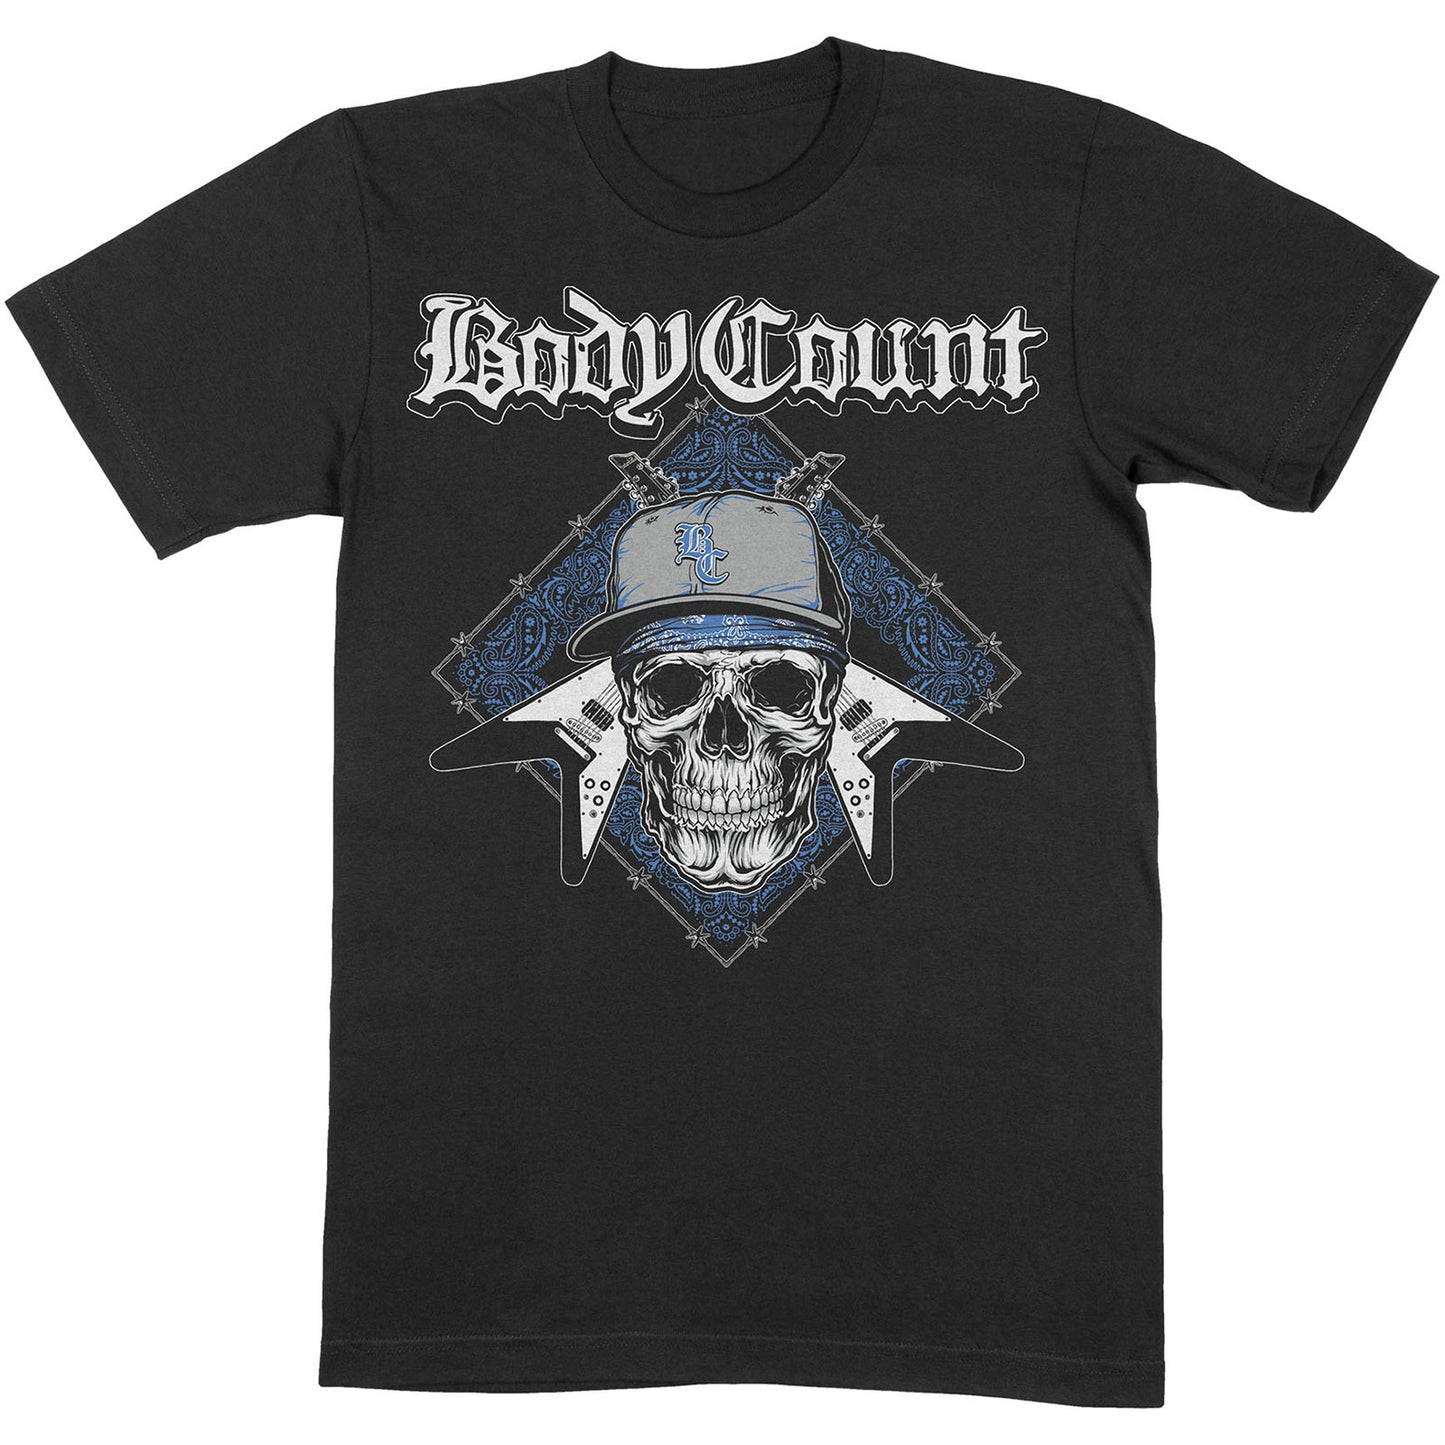 Body Count Attack Band Shirt Colours Shop Hamburg